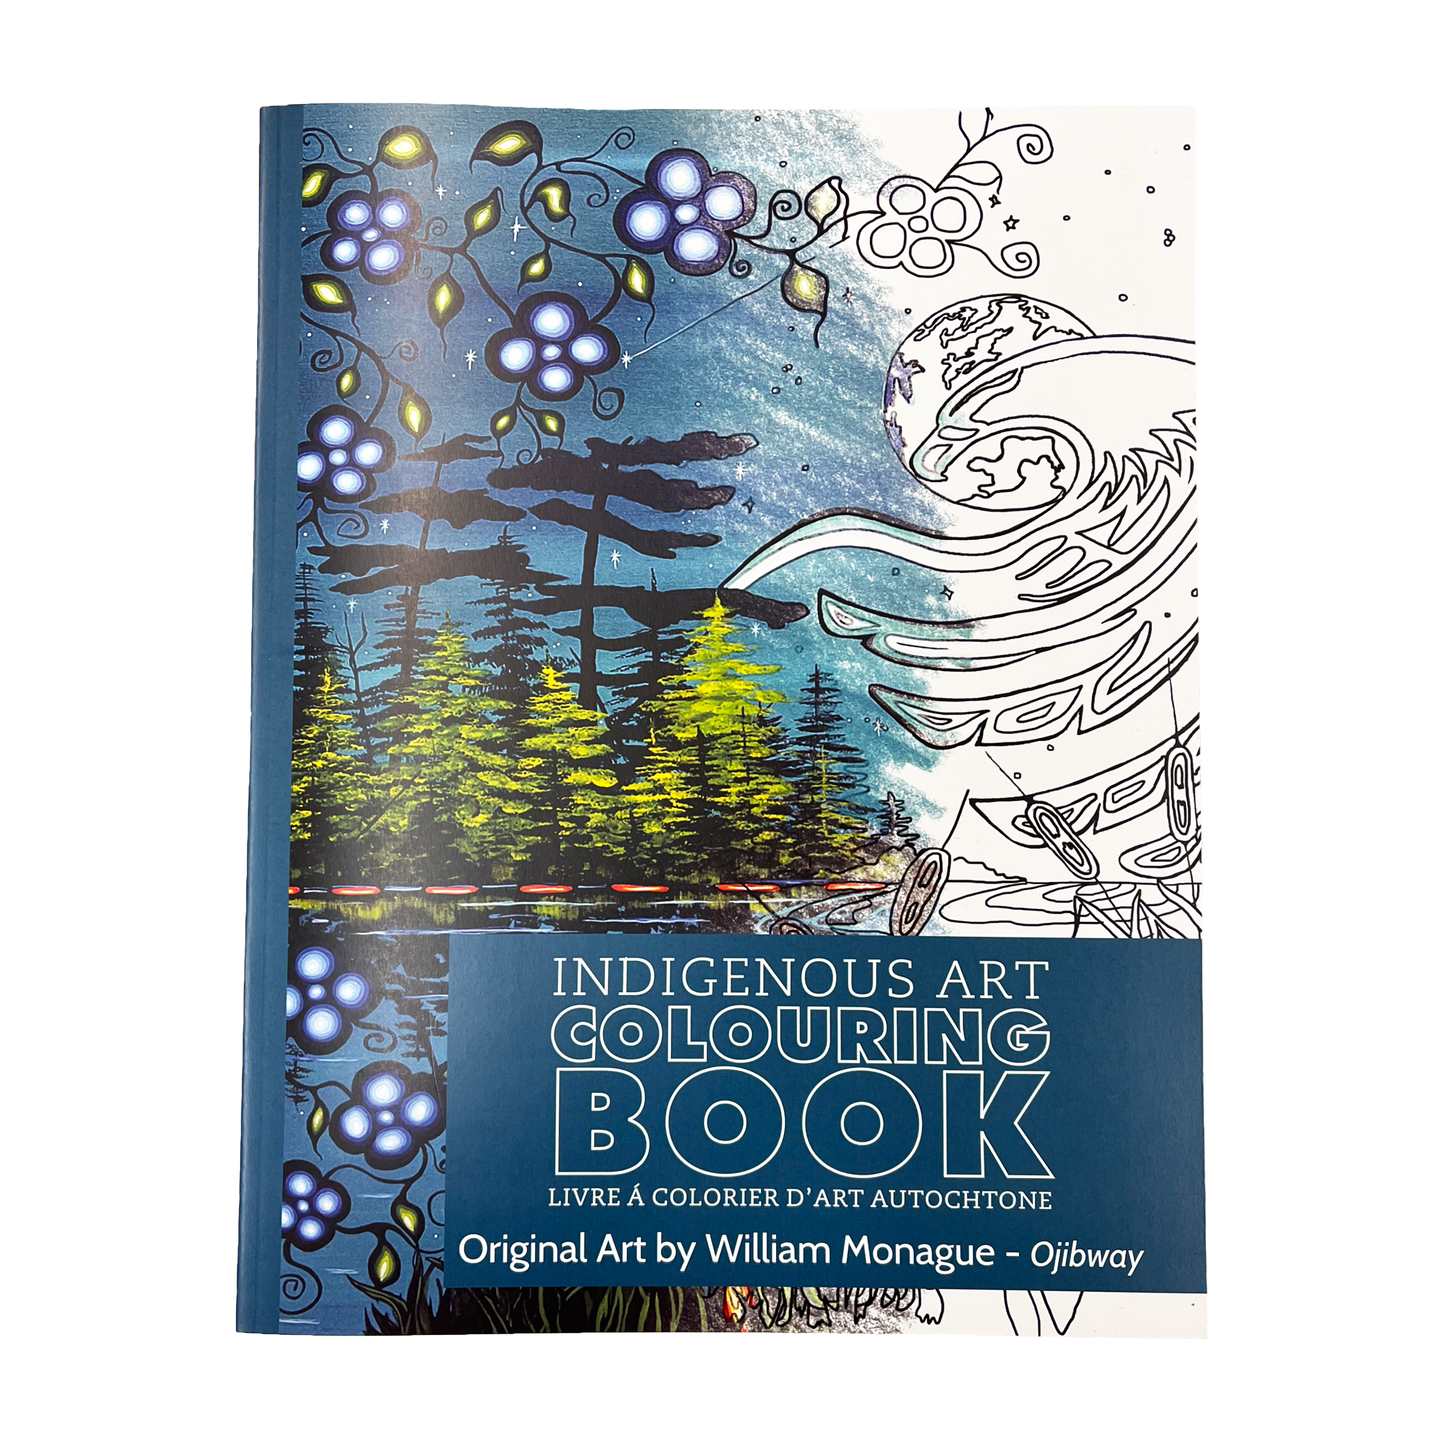 Indigenous Art Coloring Book - William Monaque